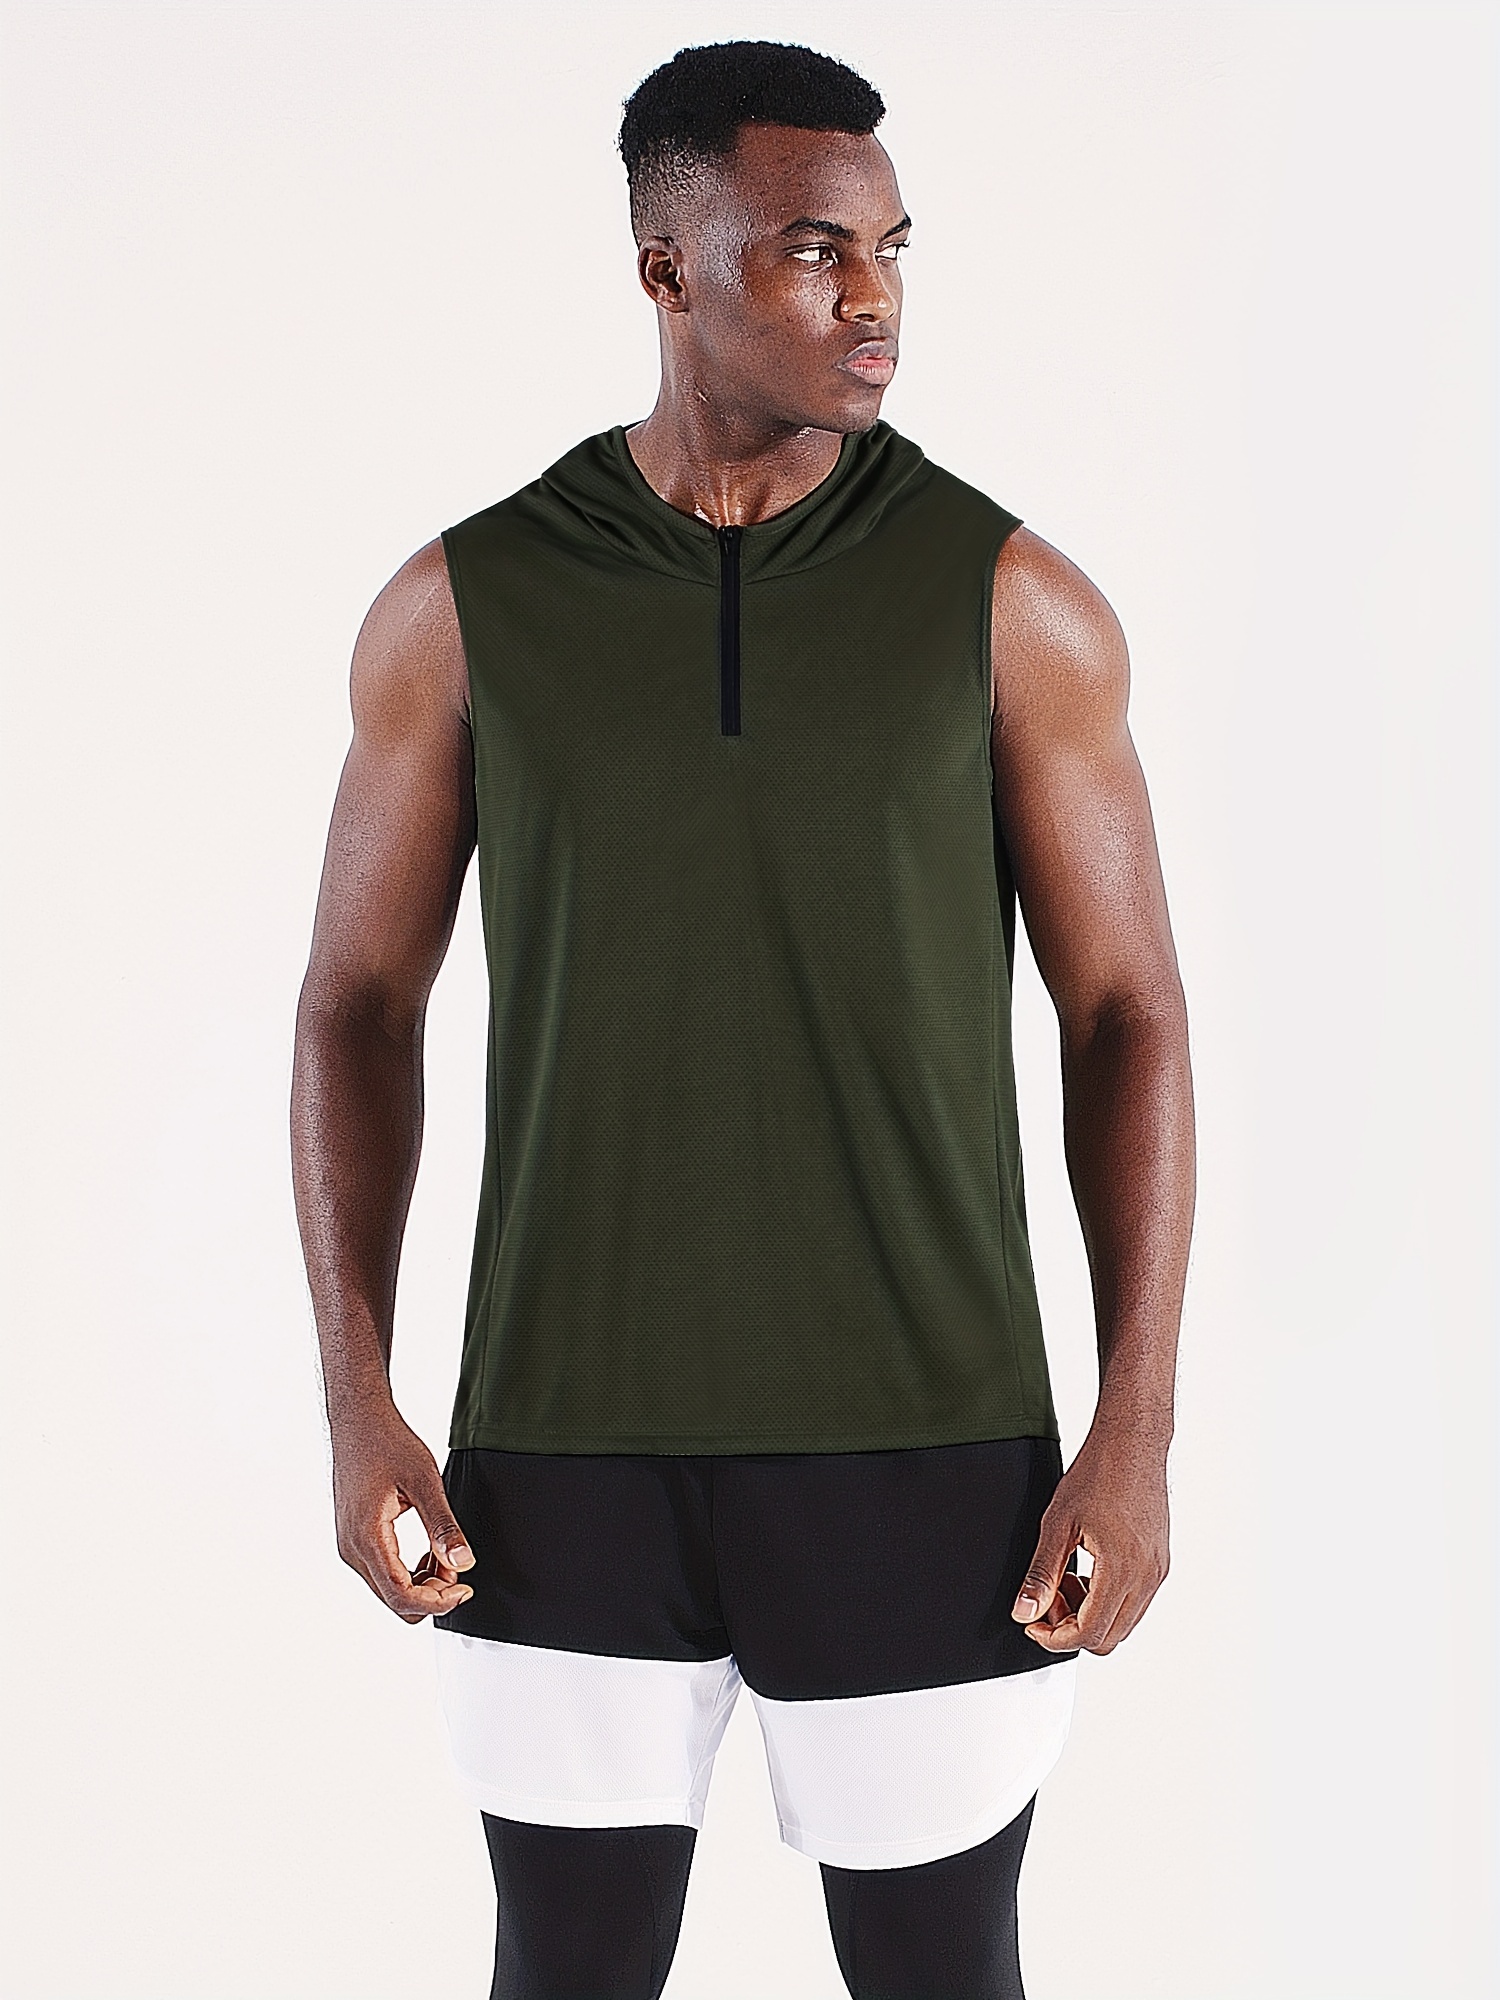 Nike Yoga Dri Fit Sleeveless T-Shirt Green